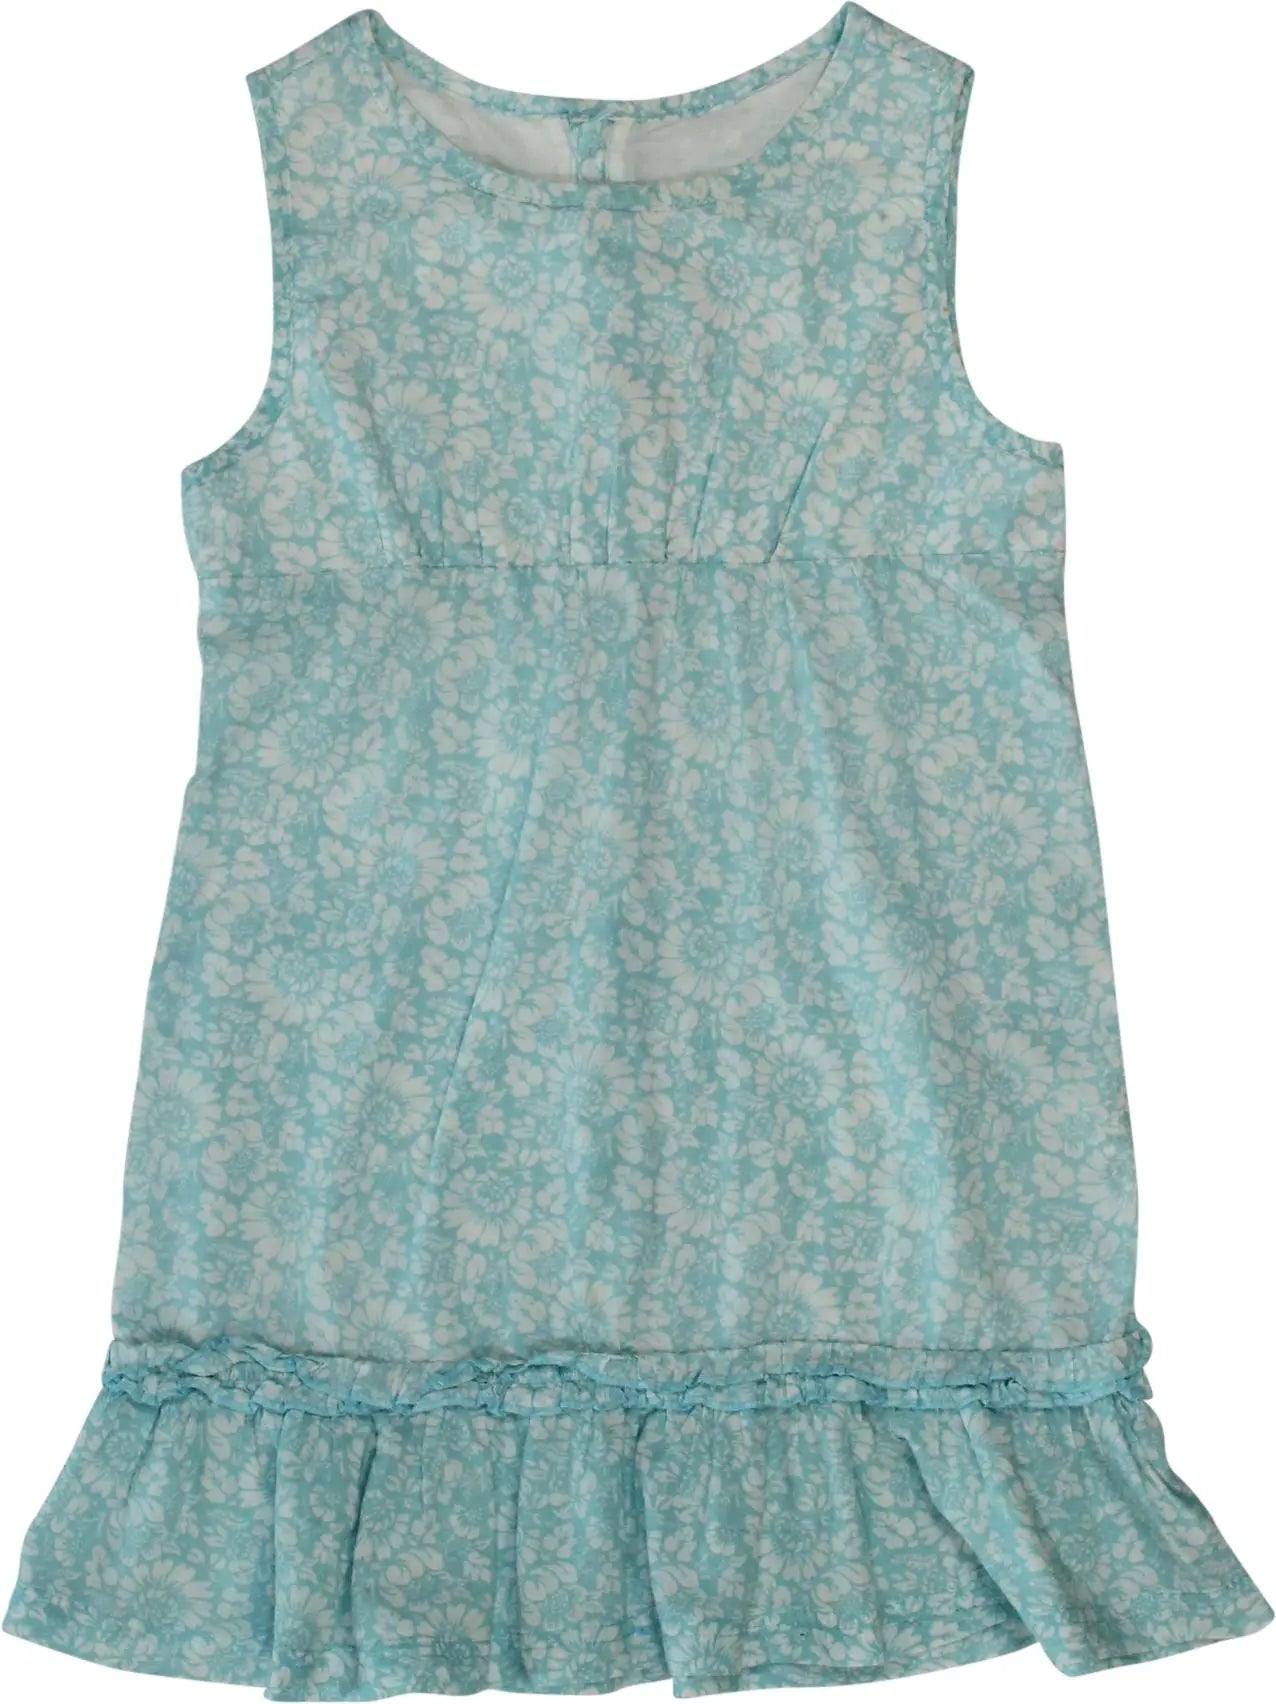 Alive - Blue Flower Dress- ThriftTale.com - Vintage and second handclothing